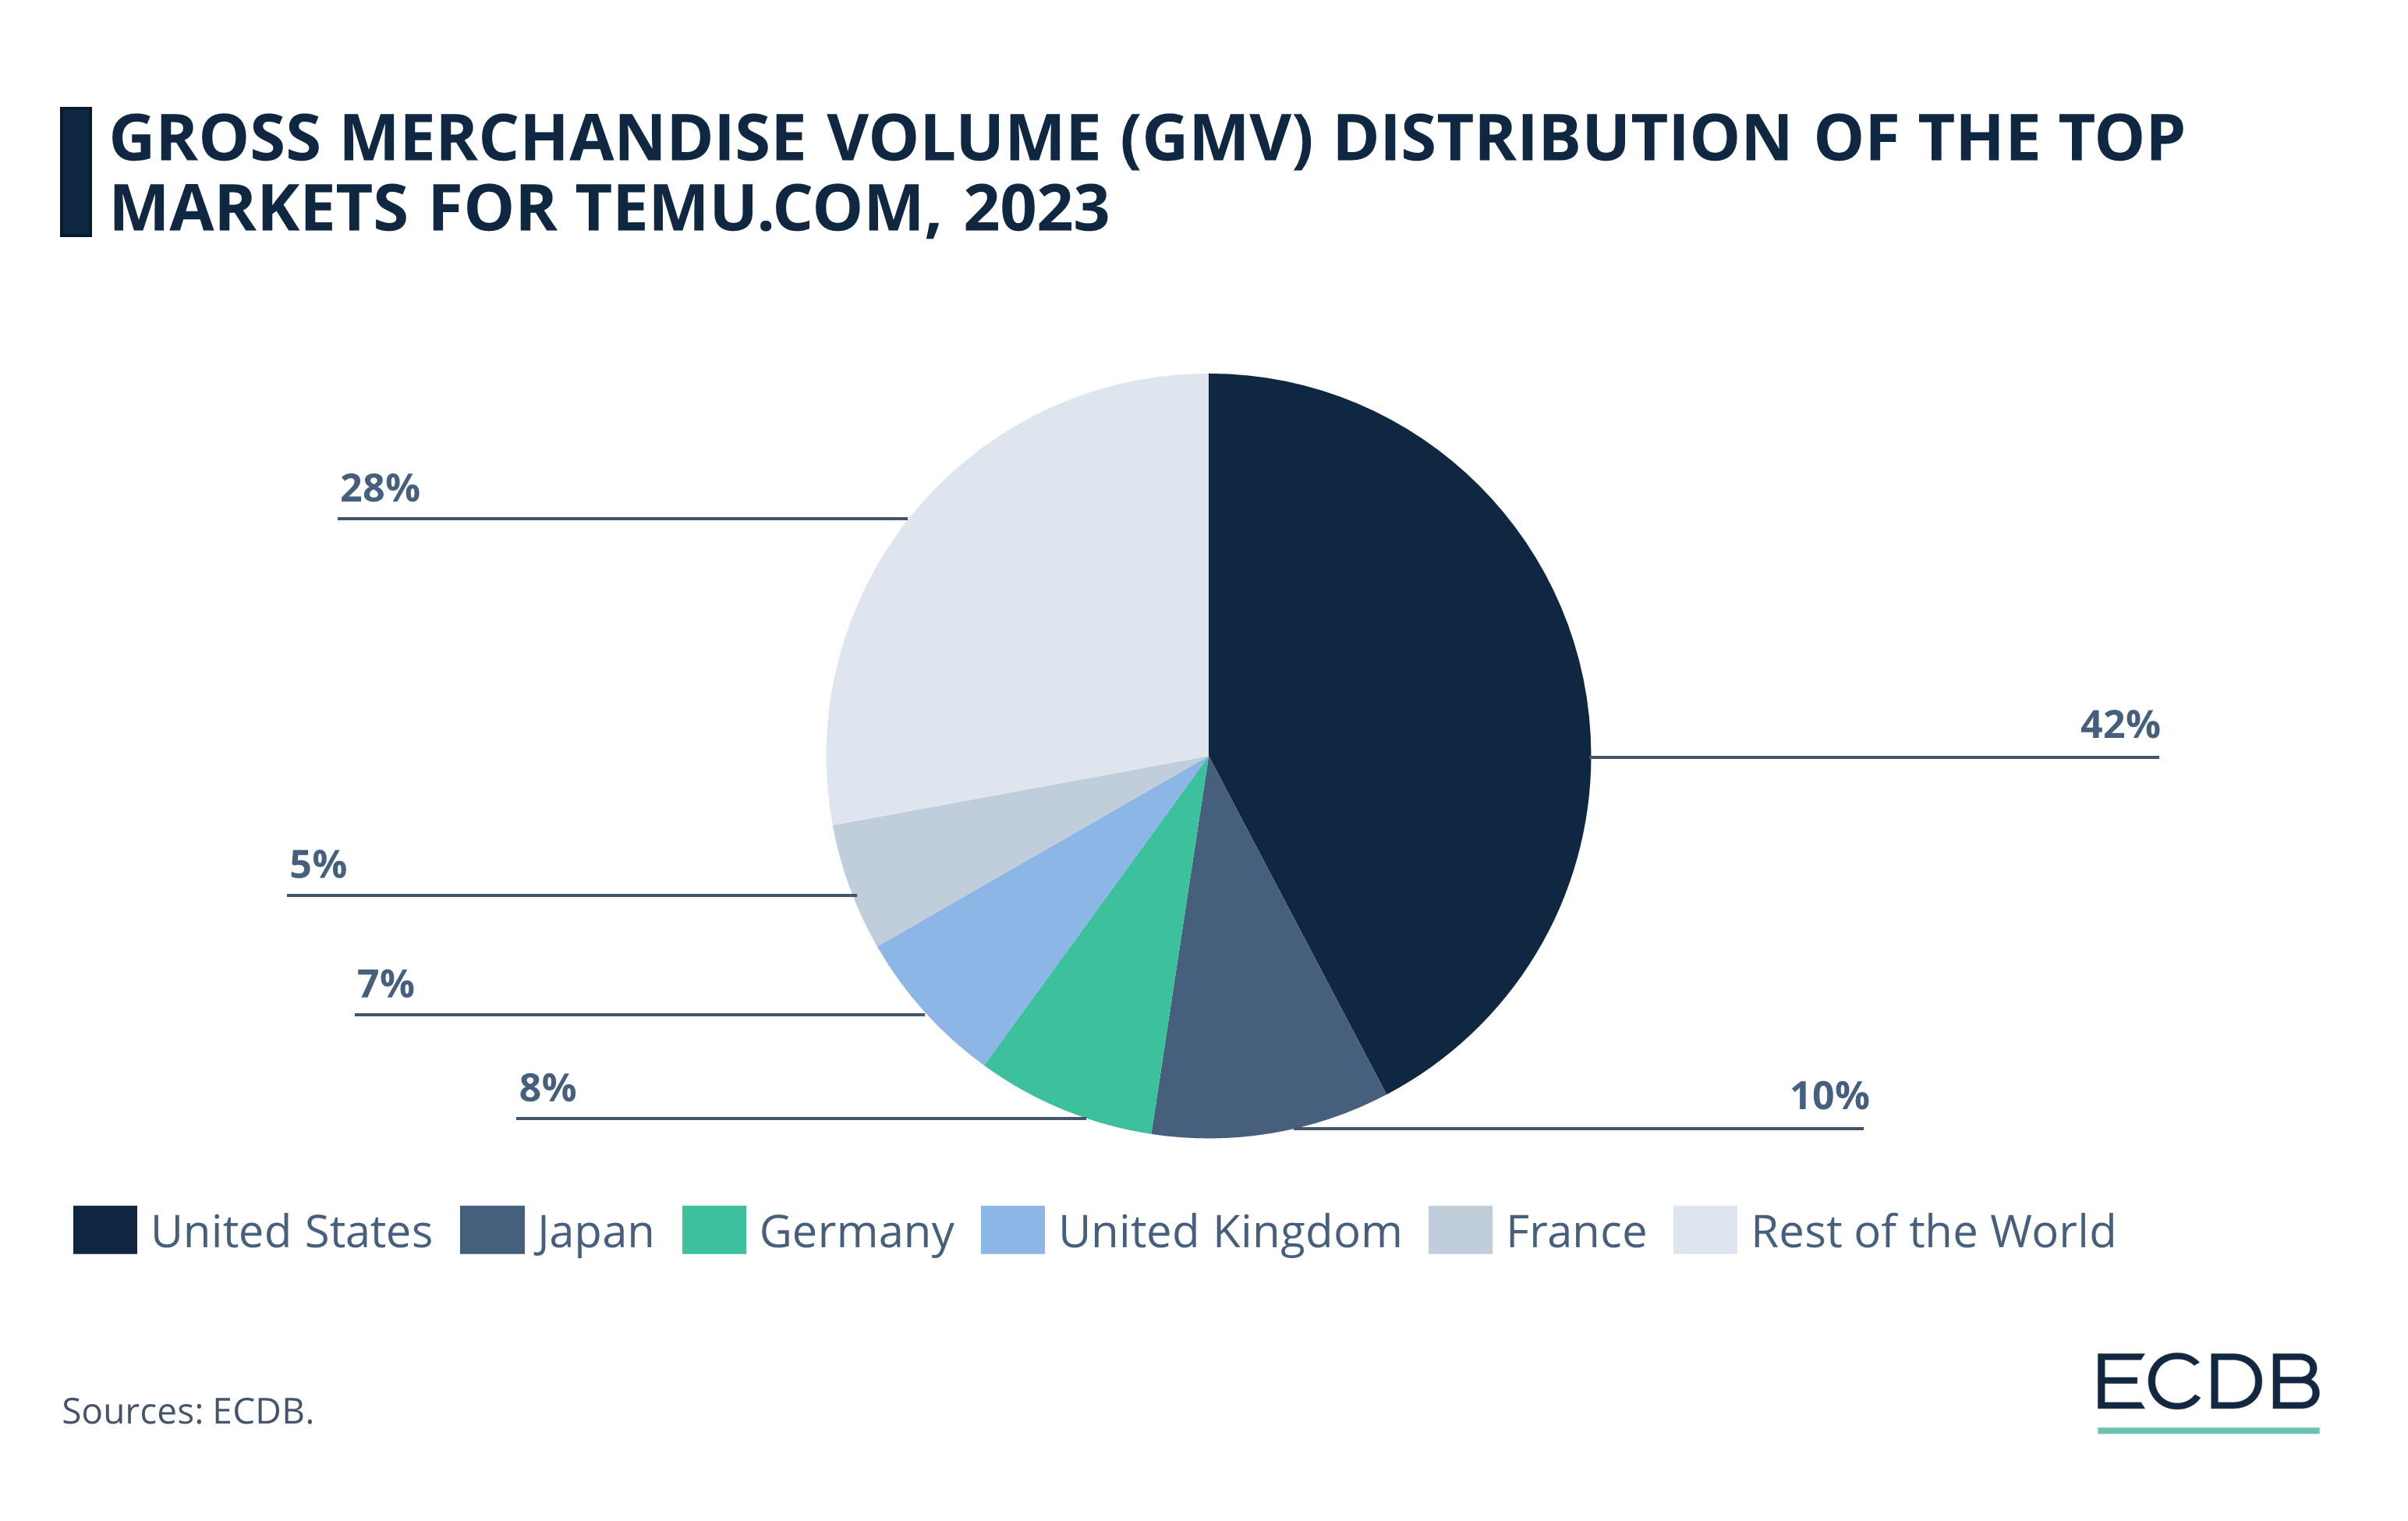 GMV Distribution of the Top Markets for Temu.com, 2023